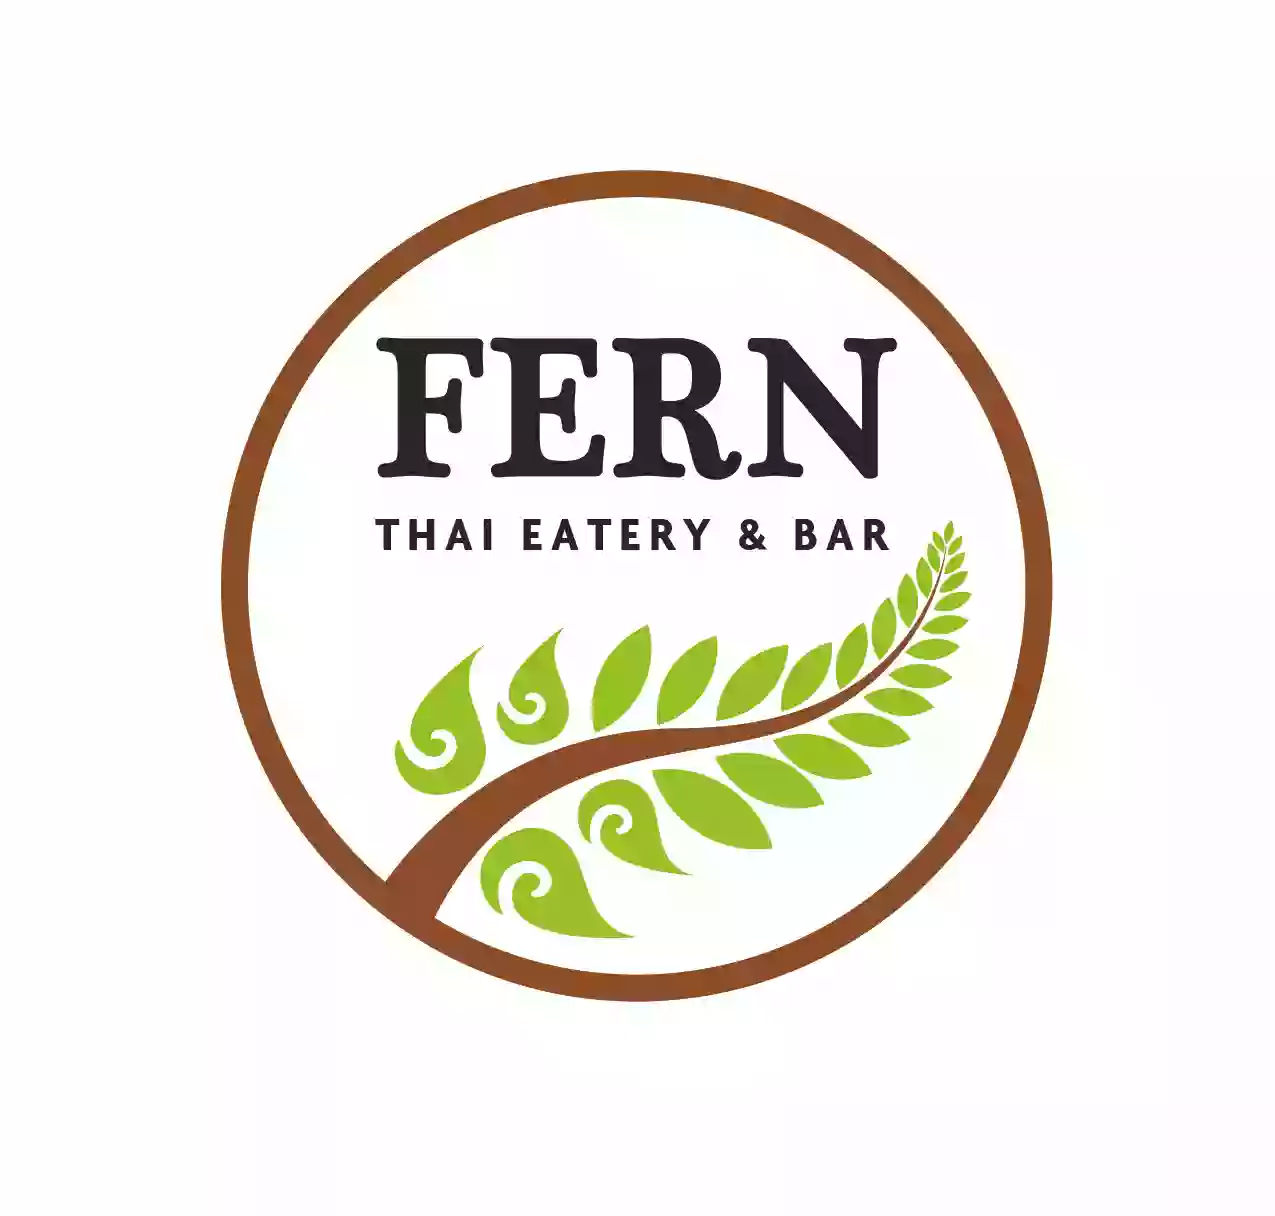 Fern Thai Eatery & Bar